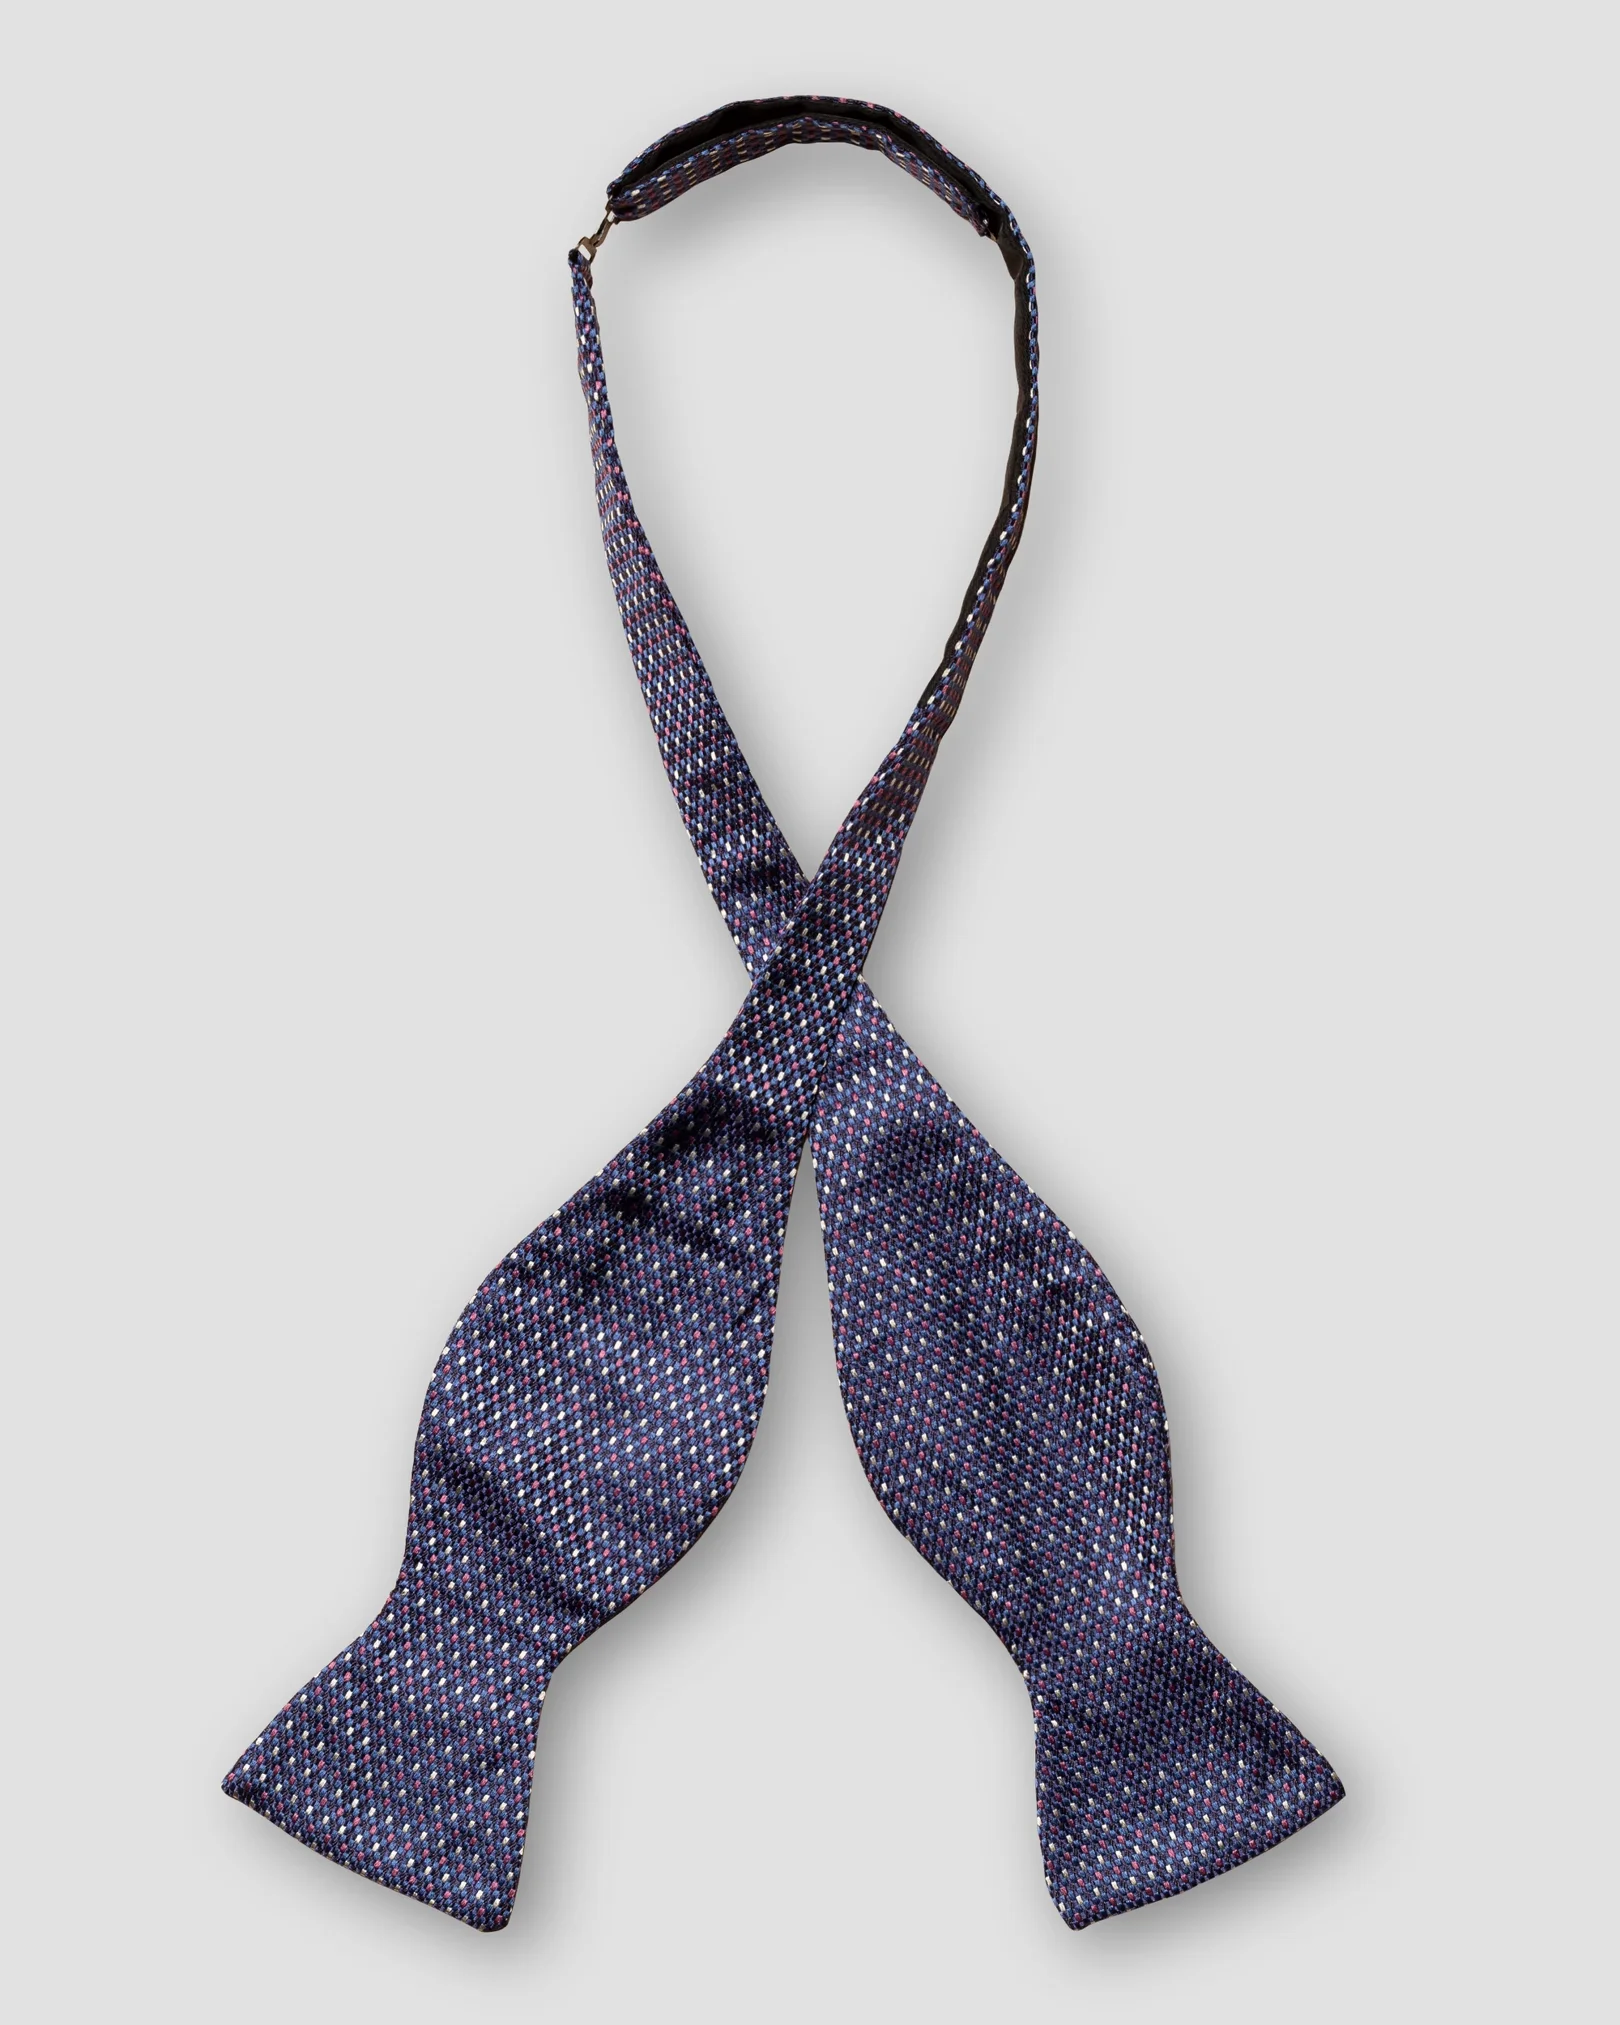 Eton - navy blue jacquard bow tie